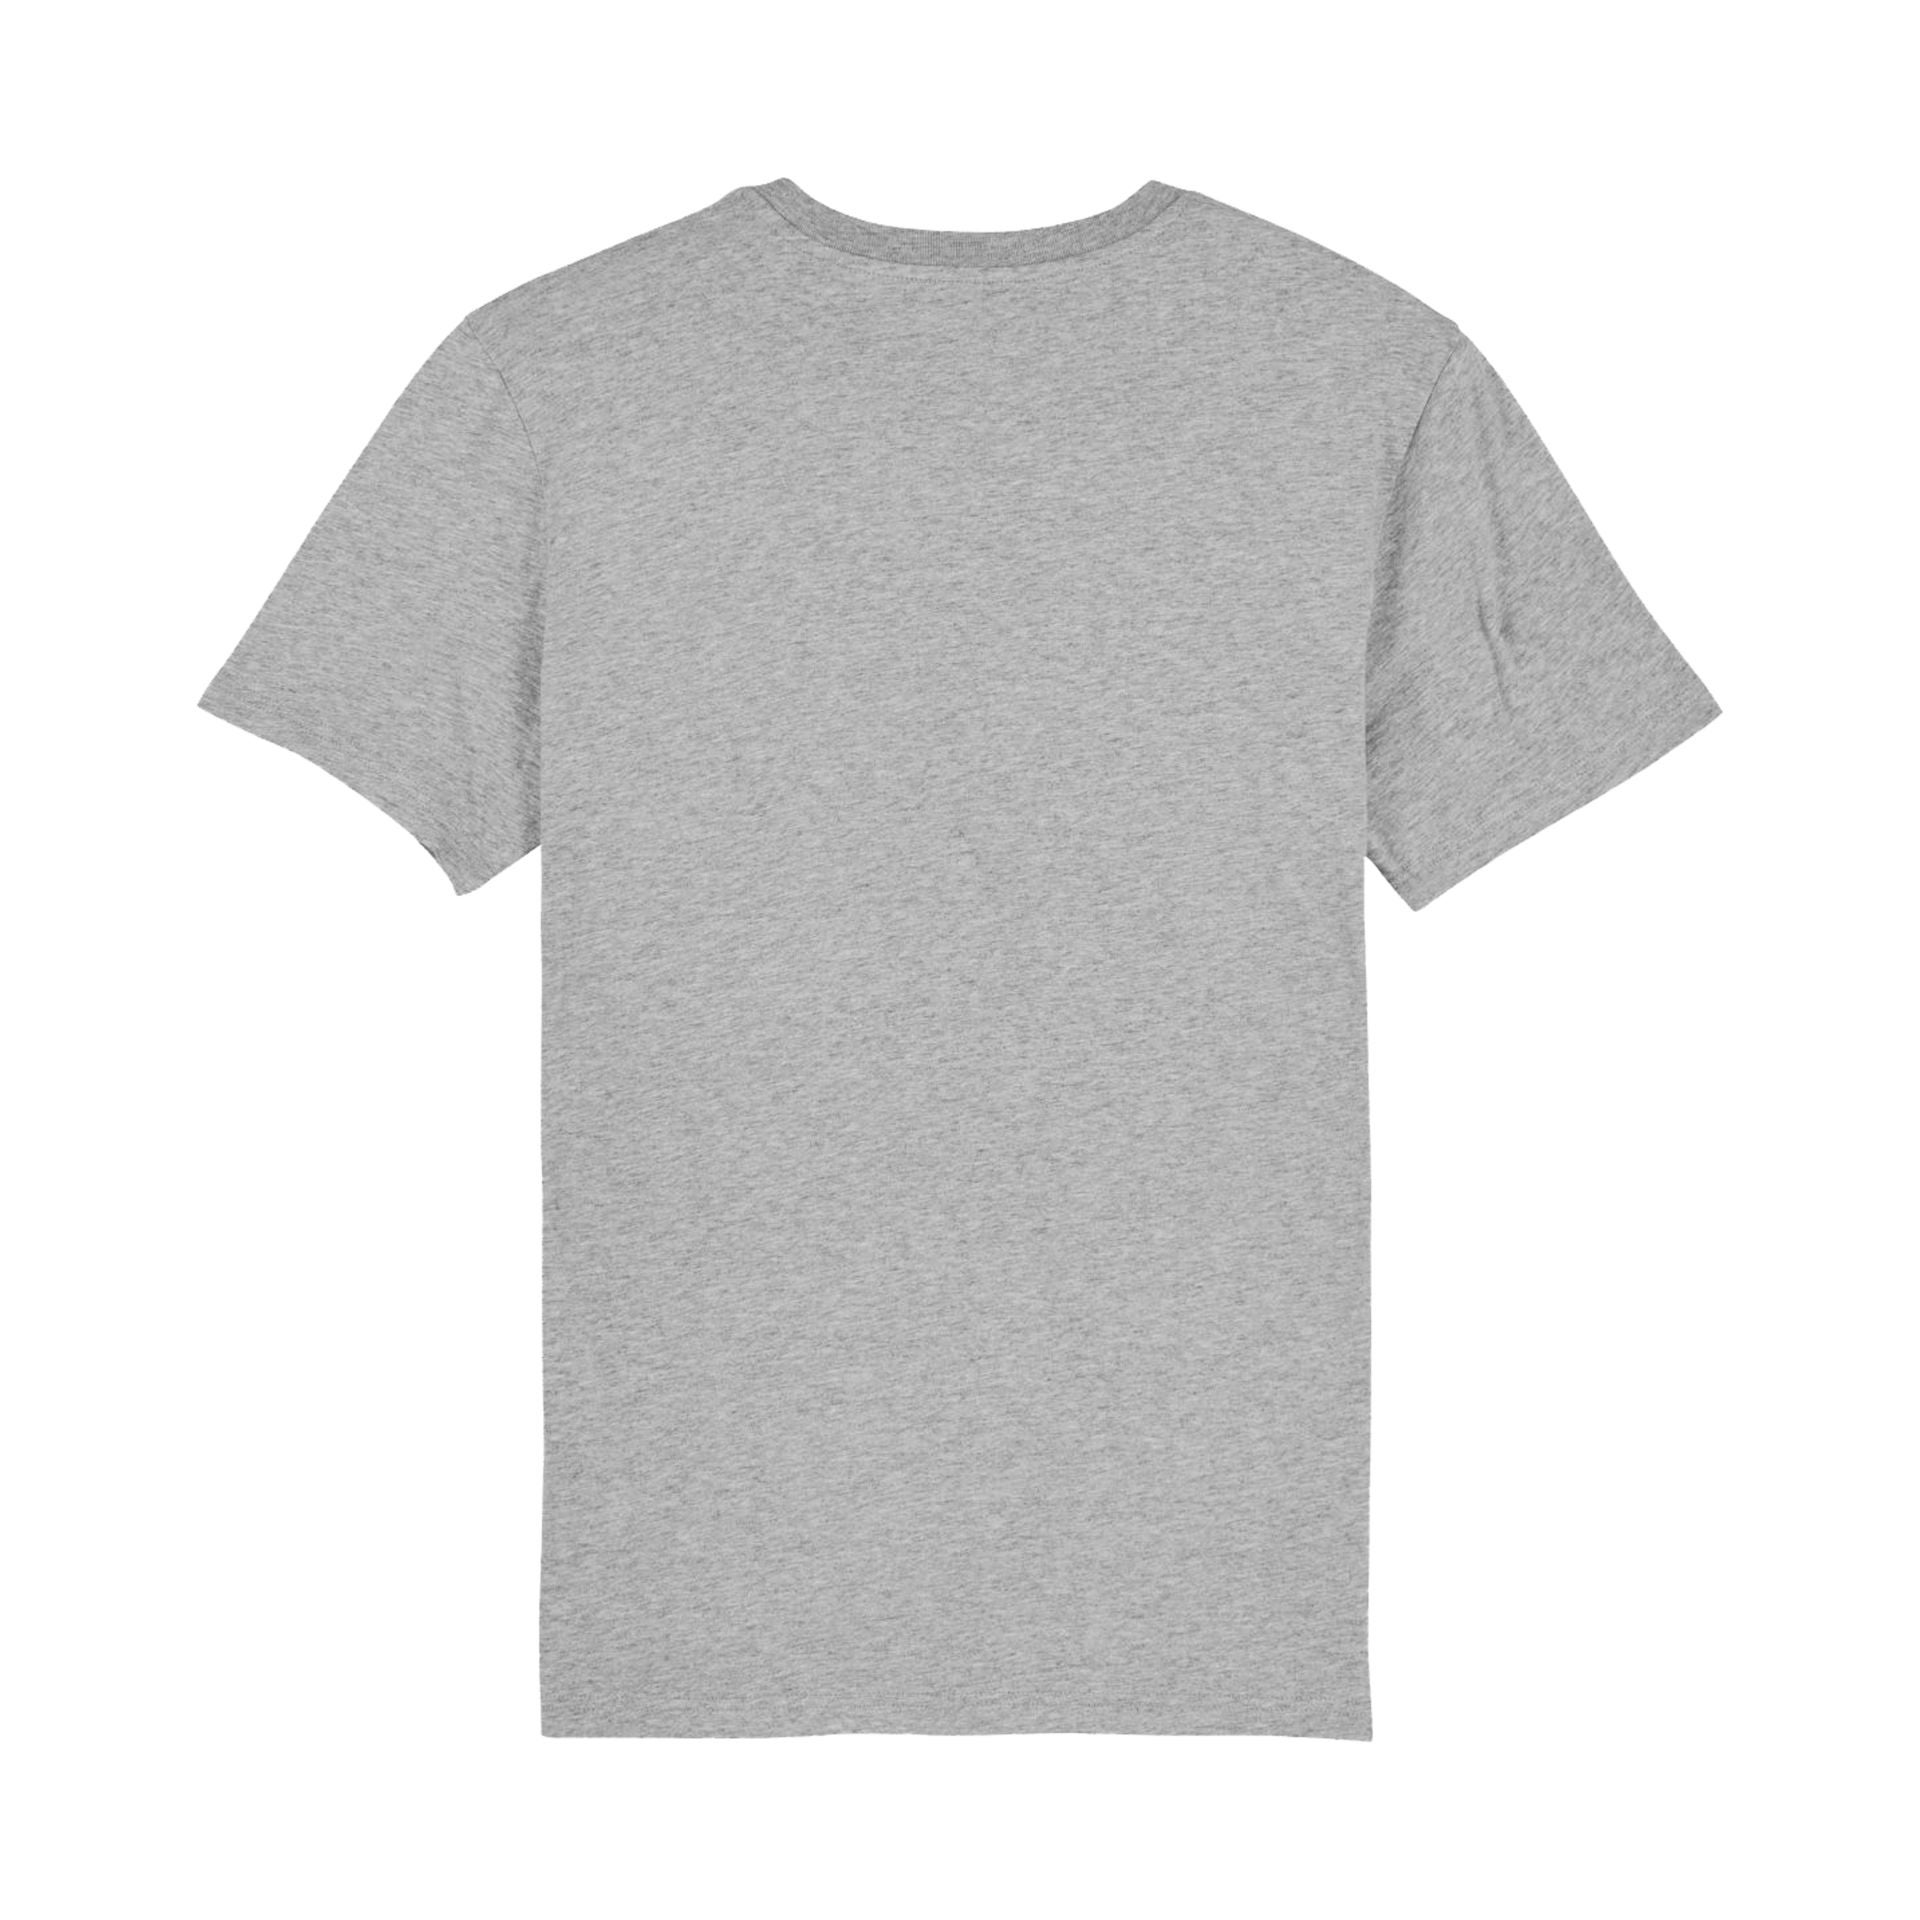 JUNG Shirt heather grey L